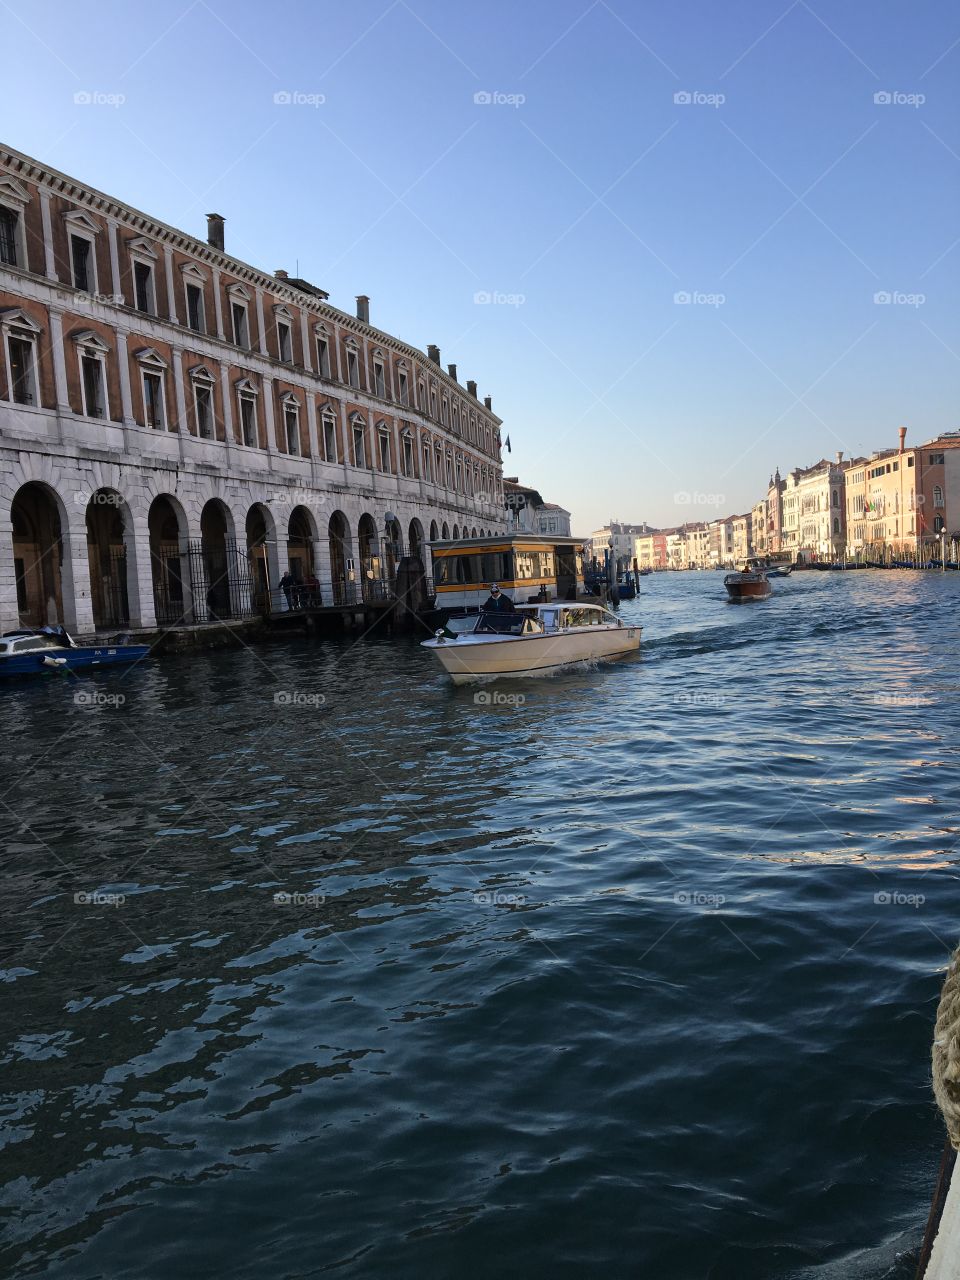 Canal, Gondola, Venetian, Water, Travel